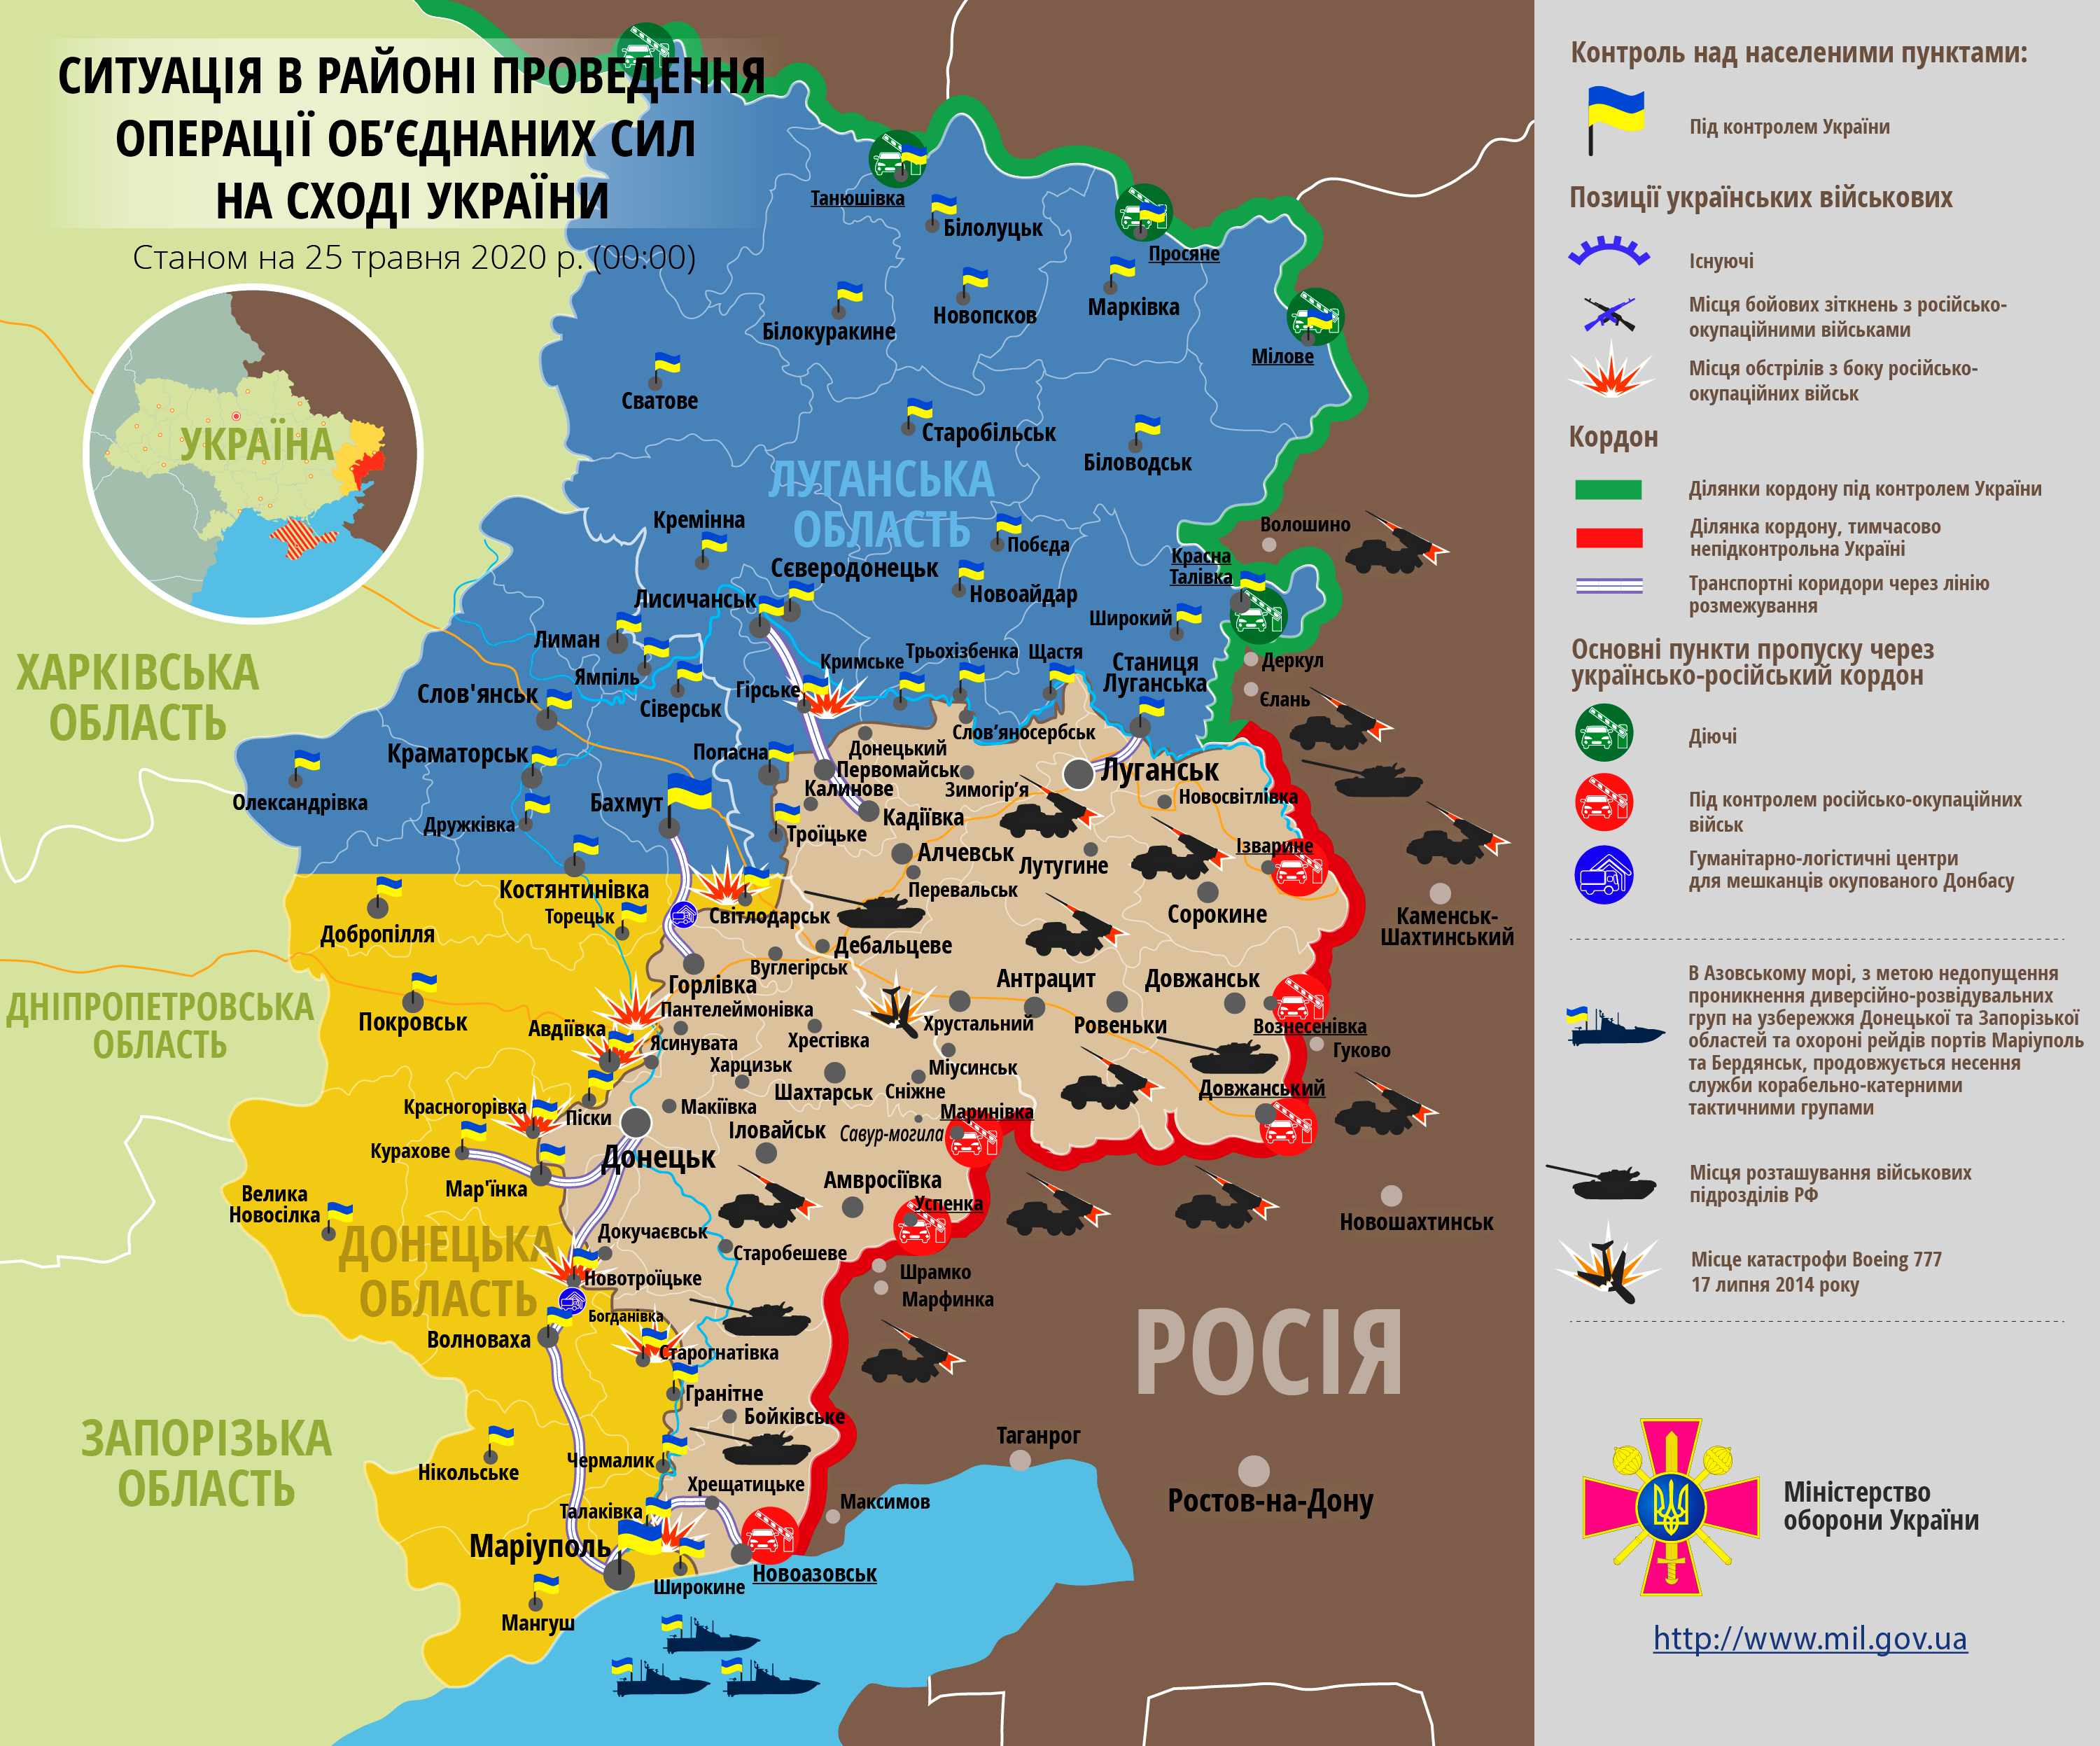 http://media.slovoidilo.ua/media/infographics/12/111505/karta-ato-rnbo-2020-05-25-uk_origin.png